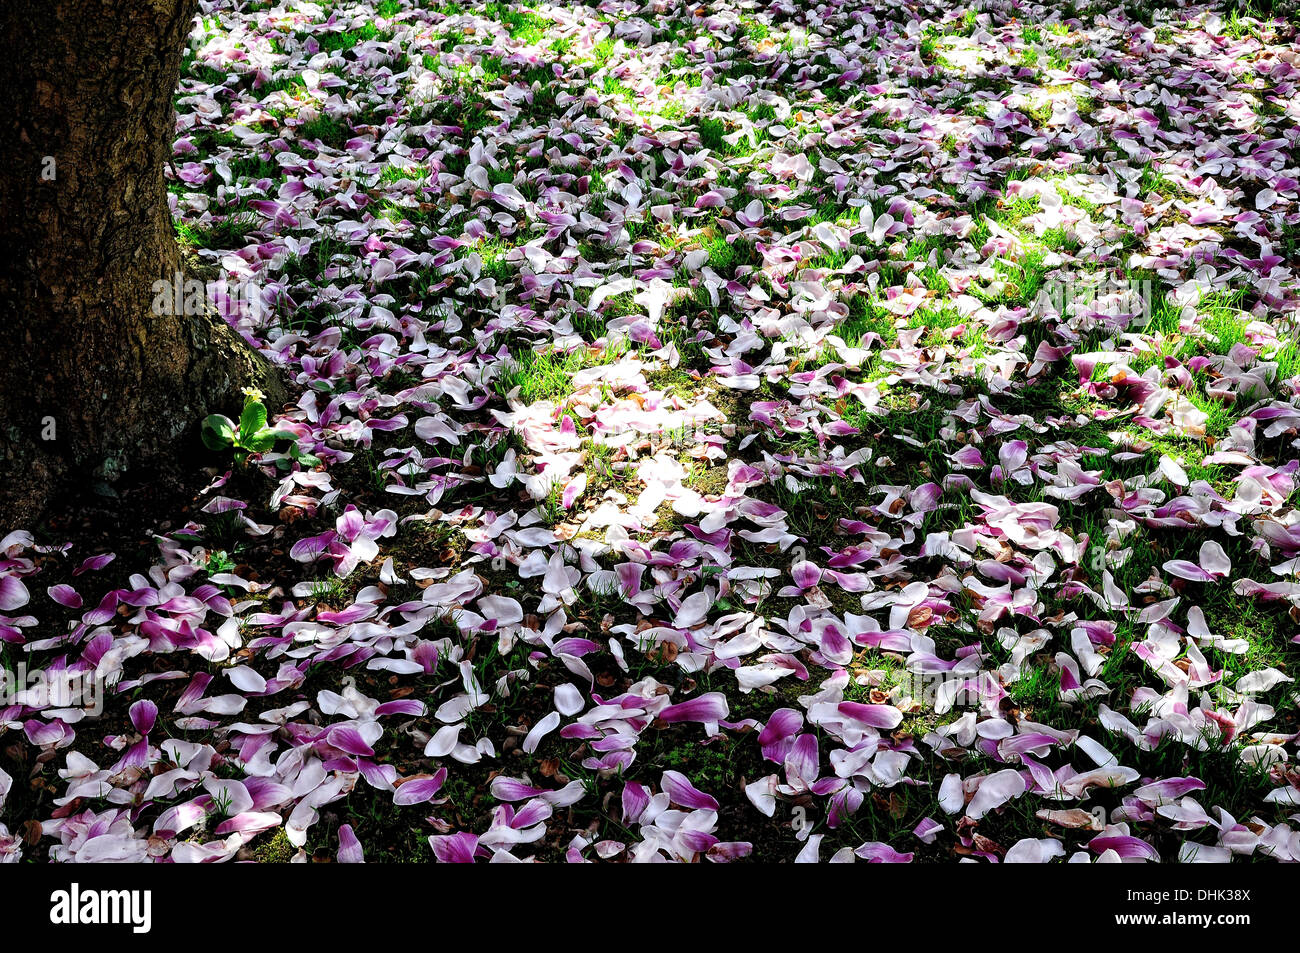 Carpet of flowers under the magnolia tree Stock Photo